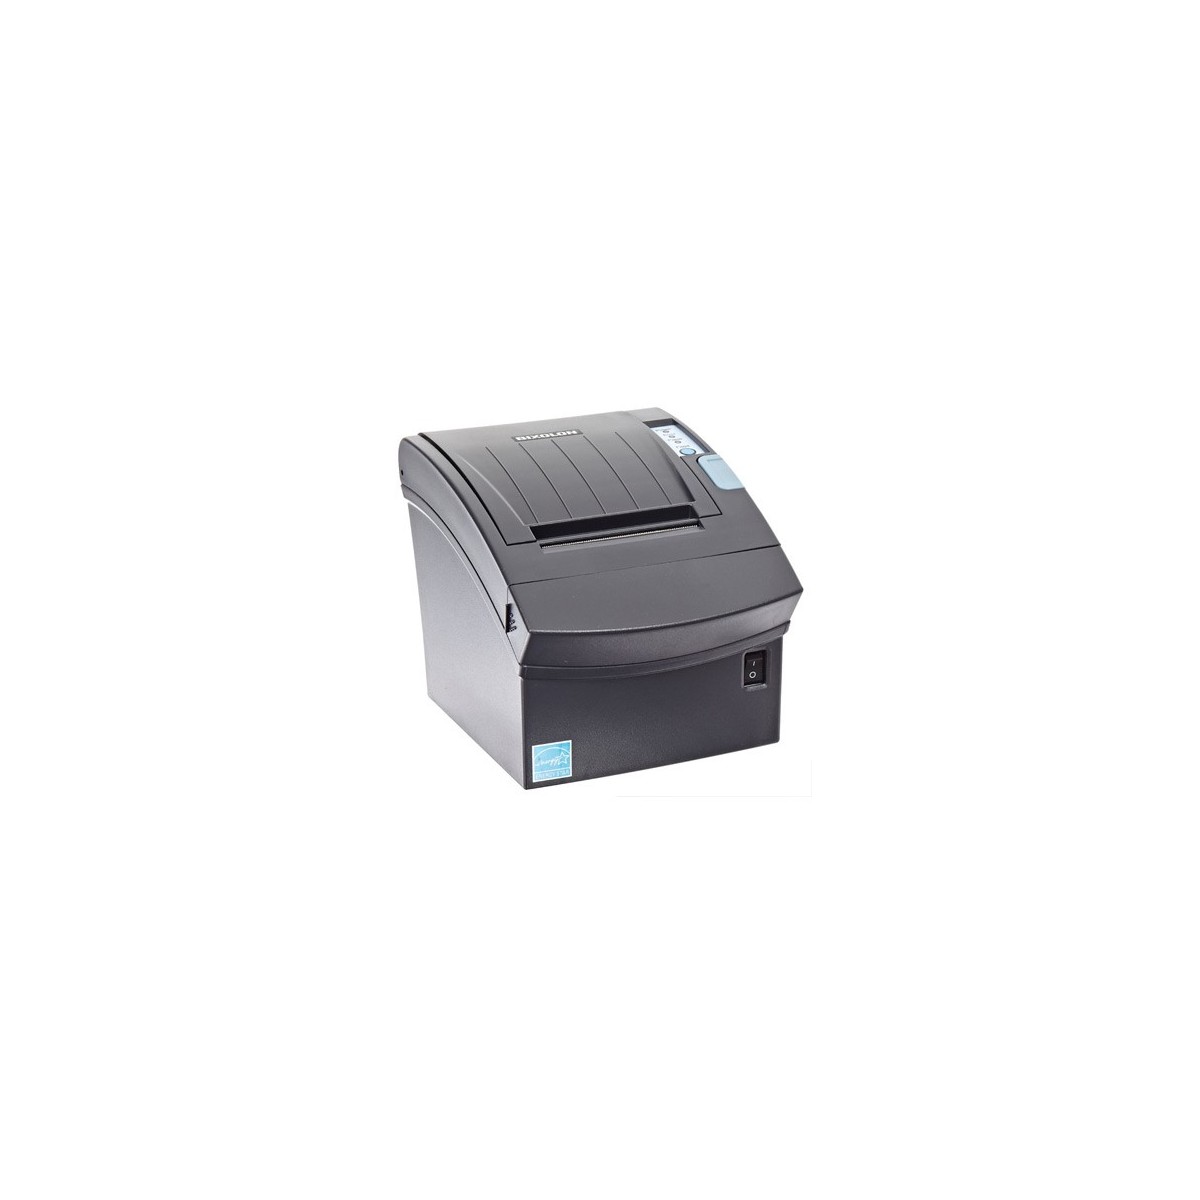 BIXOLON SRP-350III - Direct thermal - POS printer - 180 x 180 DPI - 250 mm/sec - 24 x 24 mm - 8.3 cm